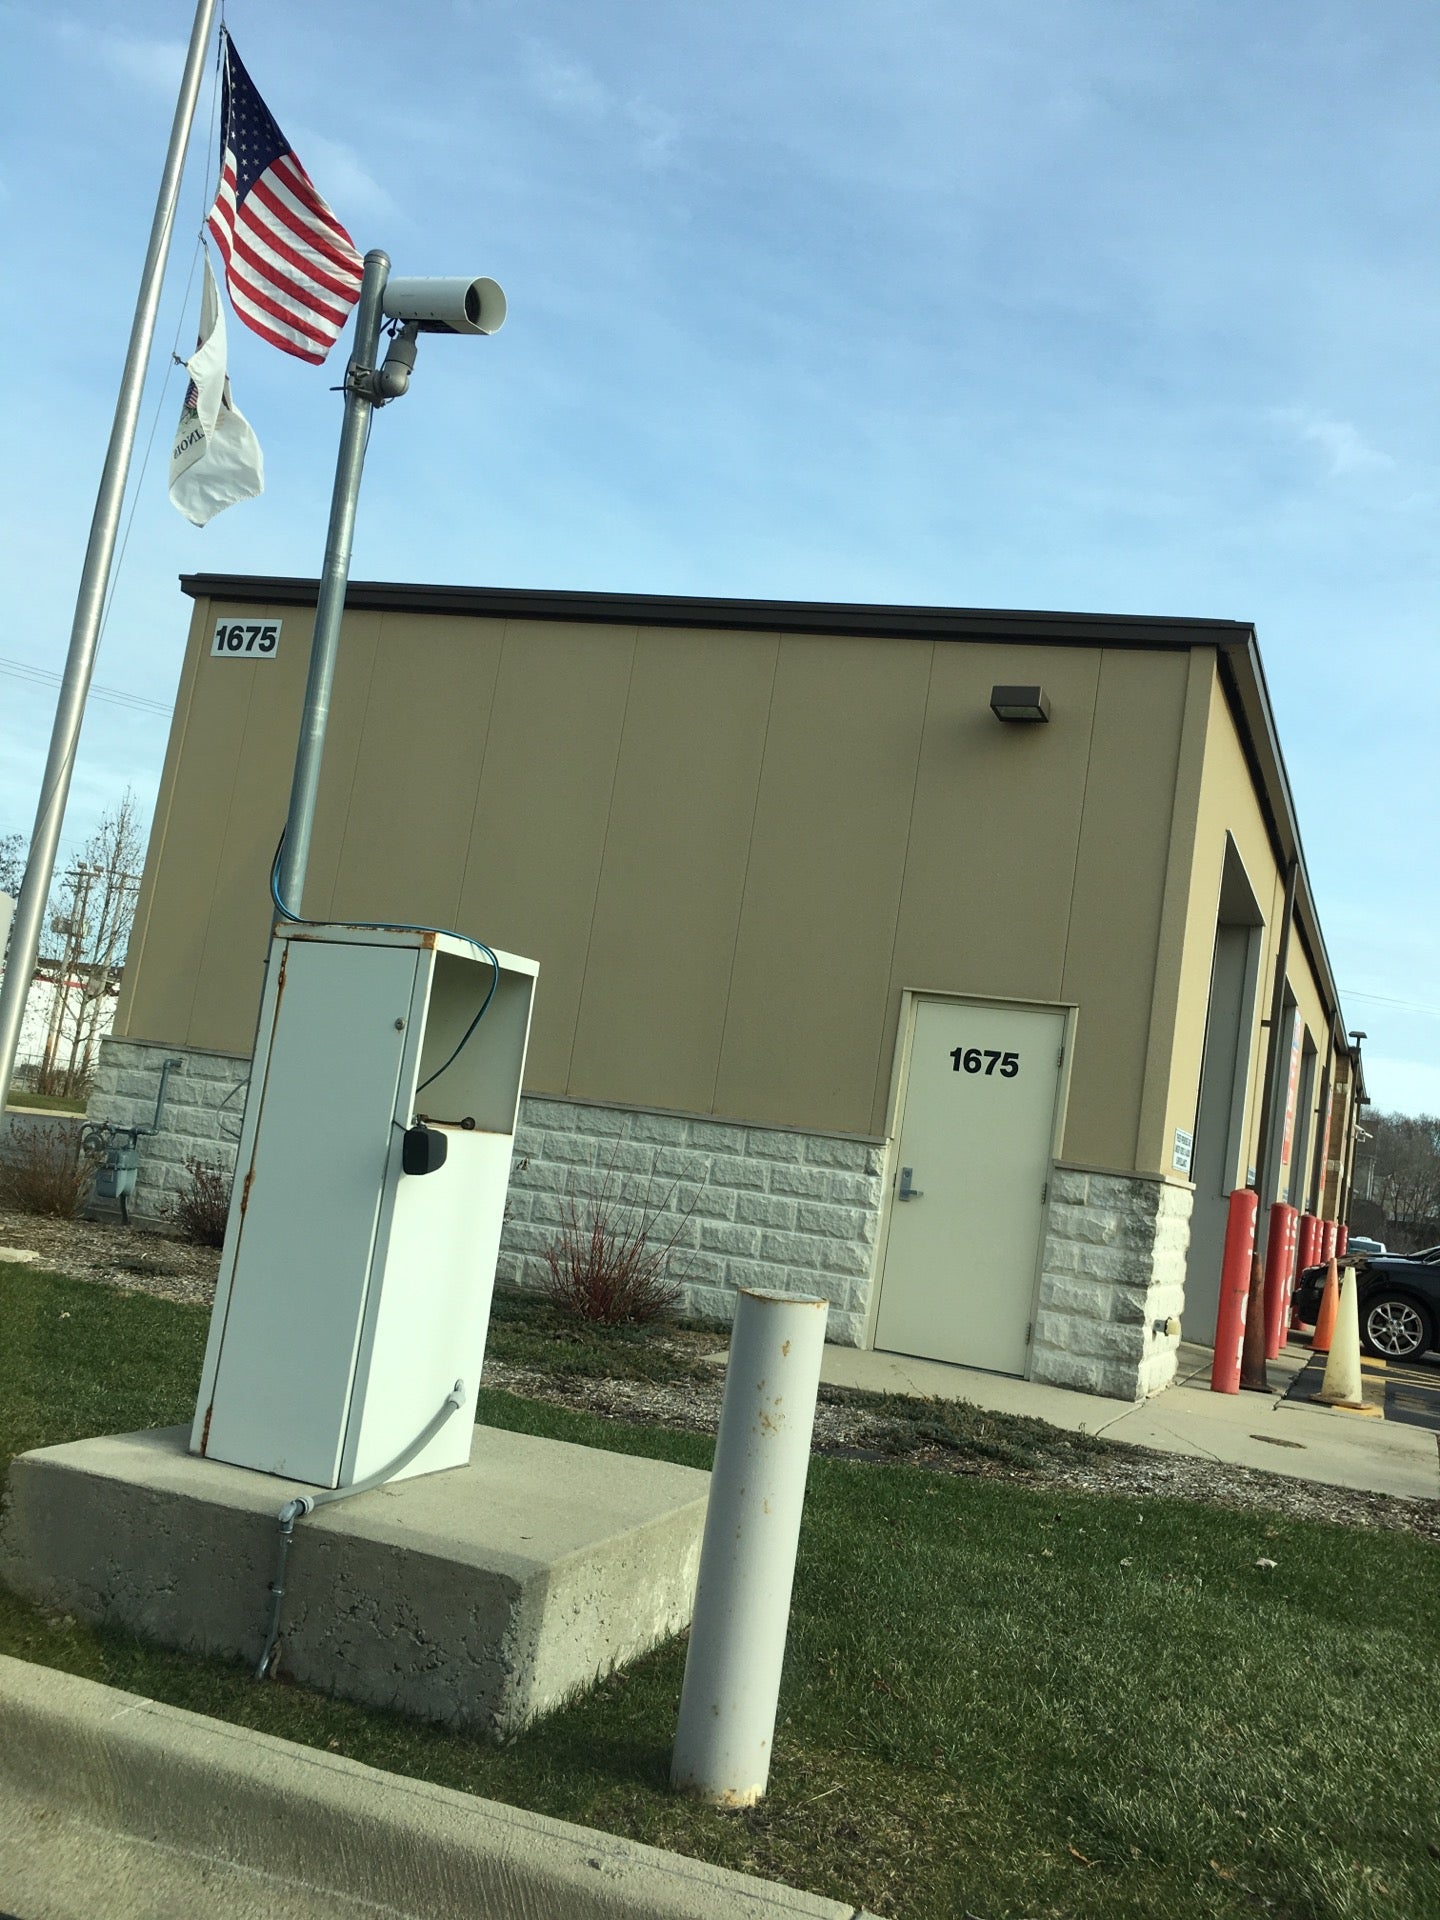 Illinois Air Team Emissions Testing Facility, 1675 Mitchell Blvd